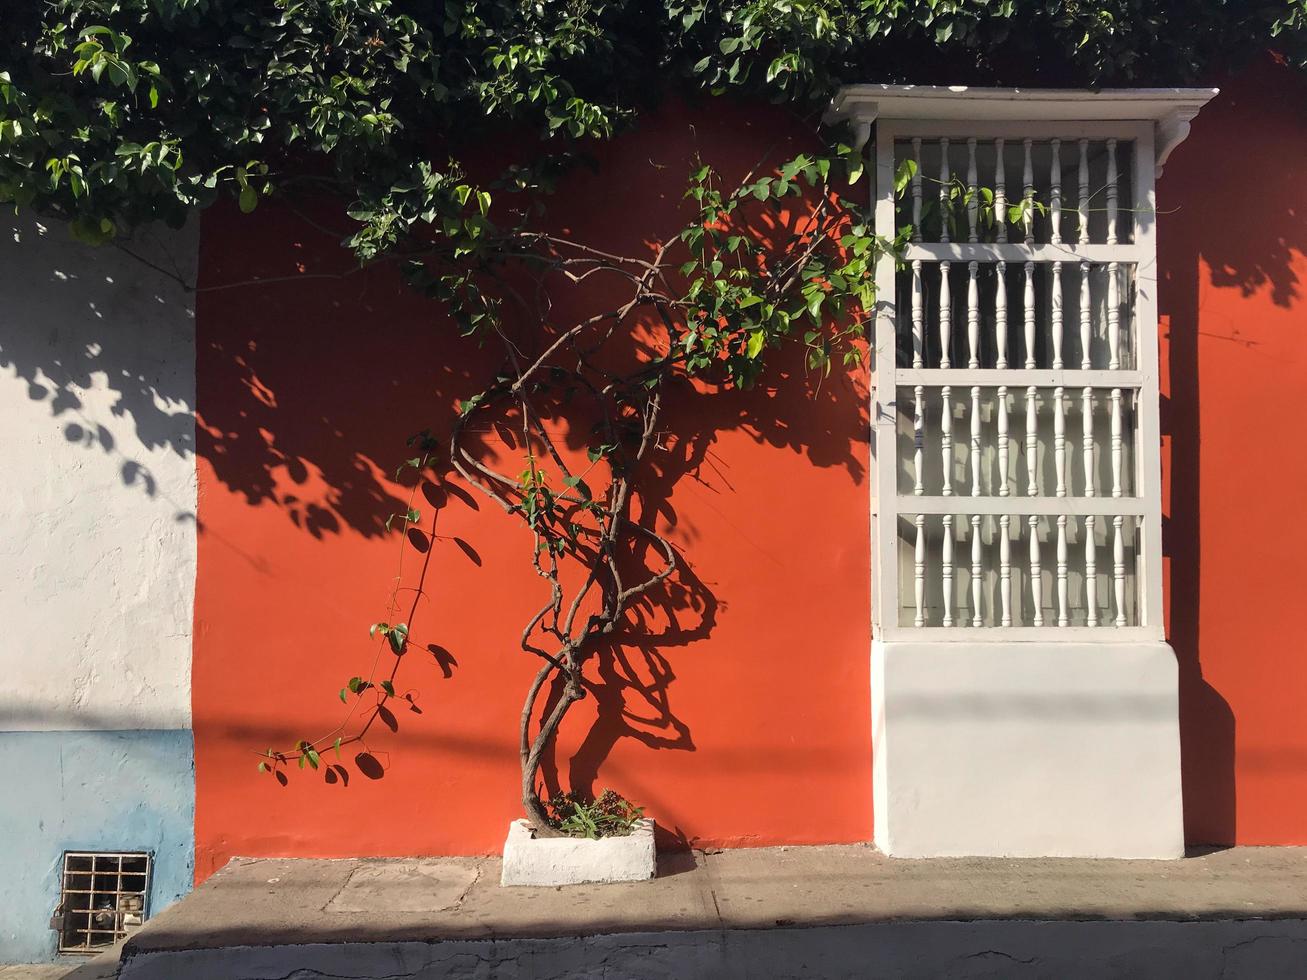 cartagena, colombia, 2020 - träd mot färgglad byggnad foto